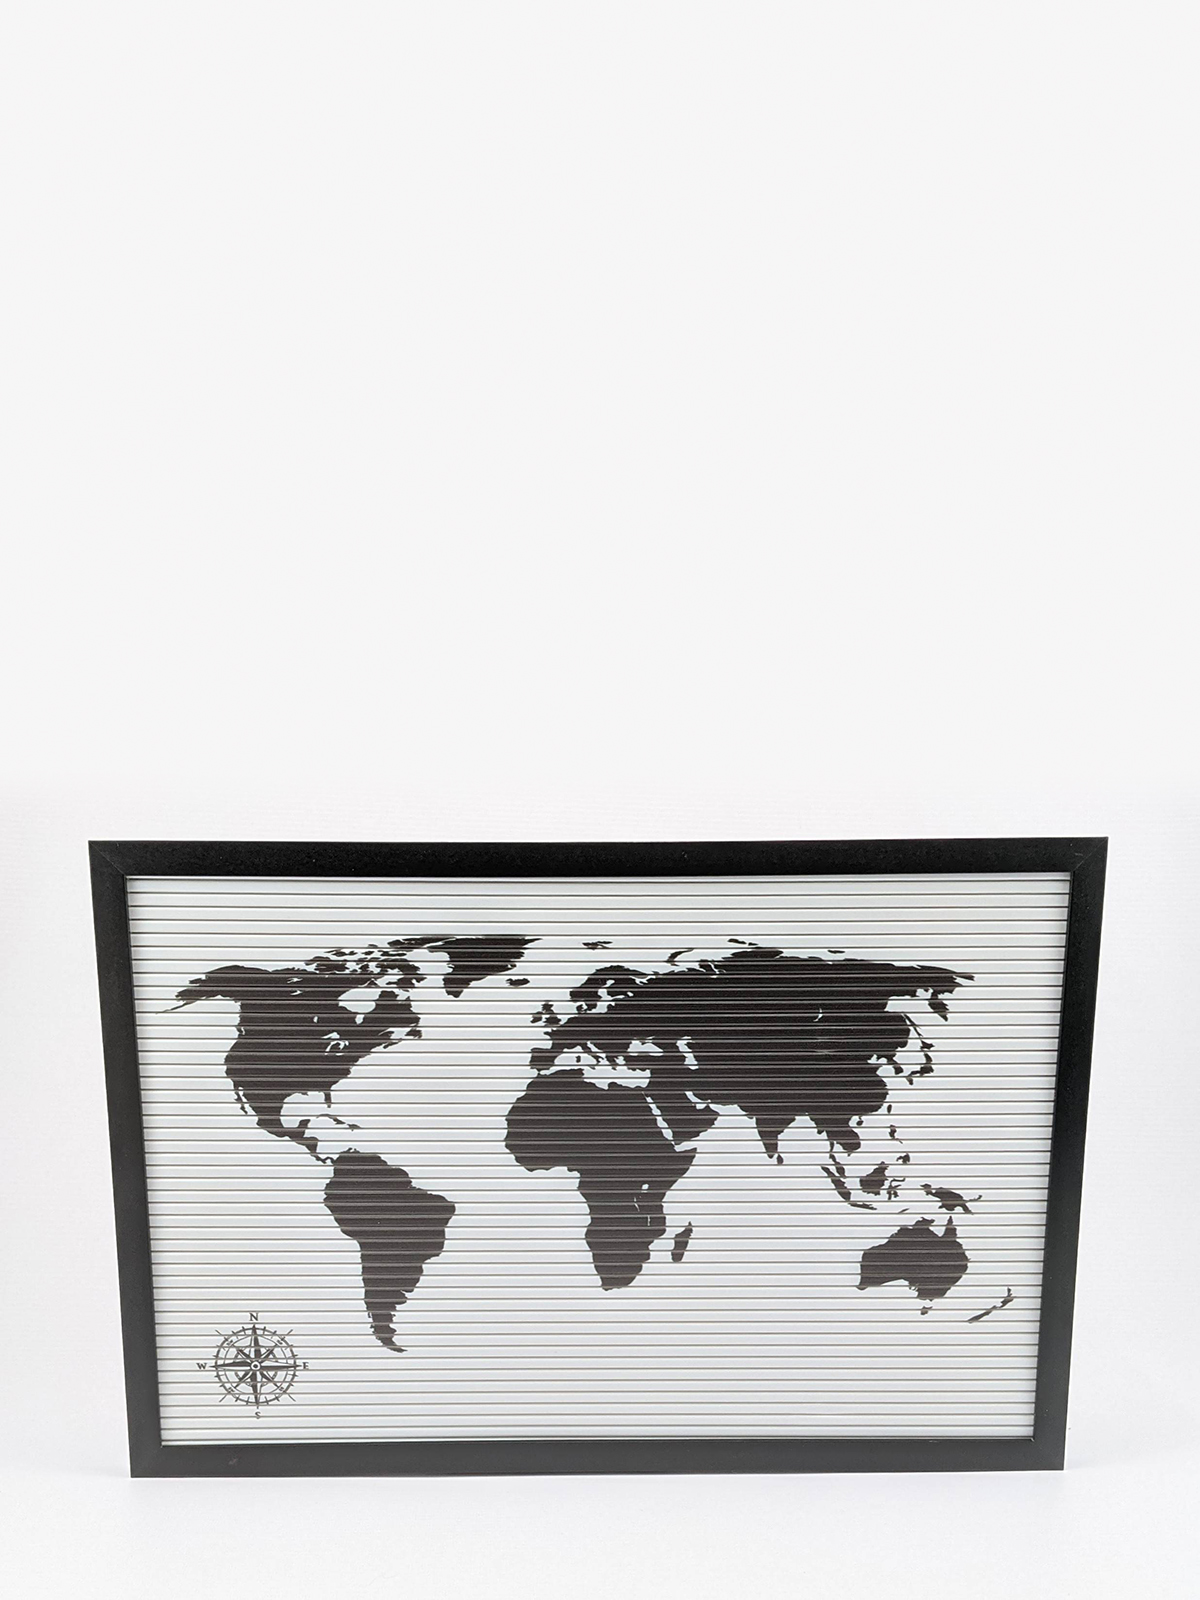 Доска на стену интерактивная «Карта мира» с буквами — Home, акция .